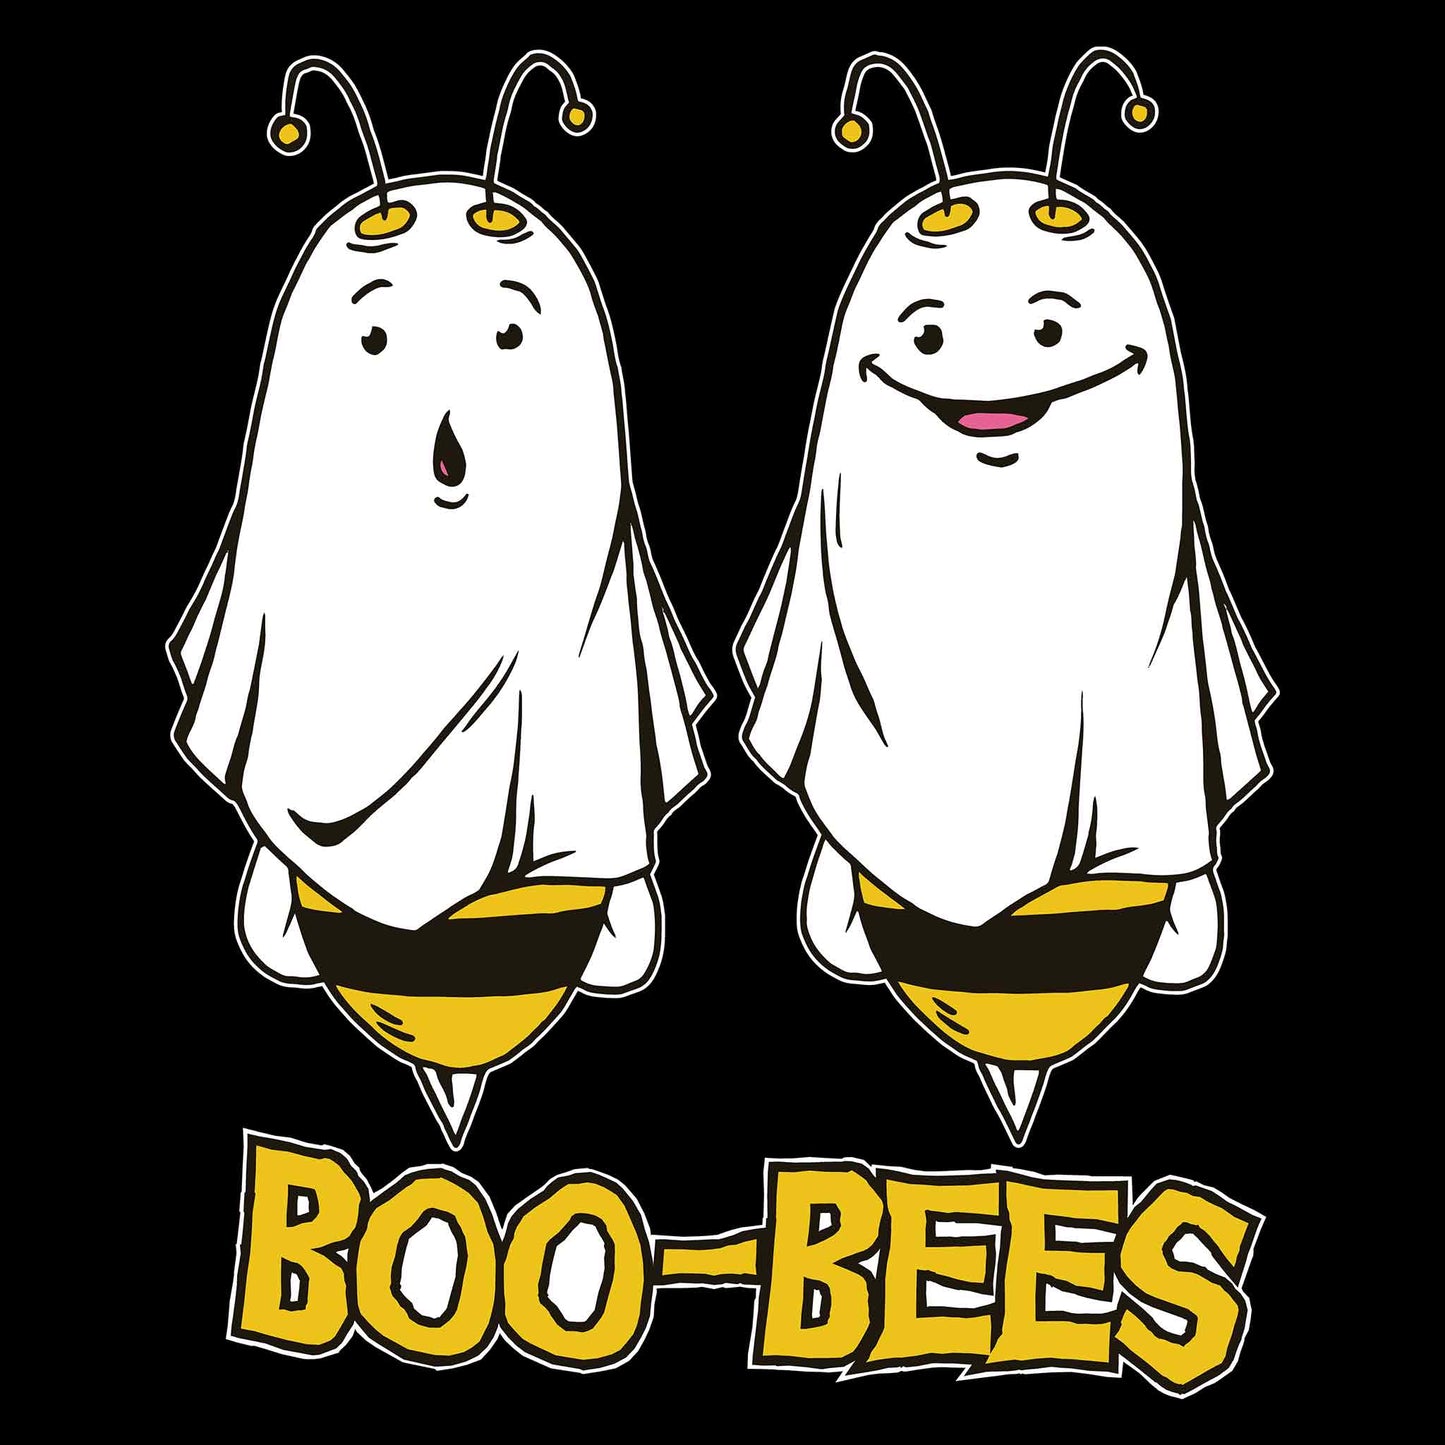 Boo-Bees T-Shirt